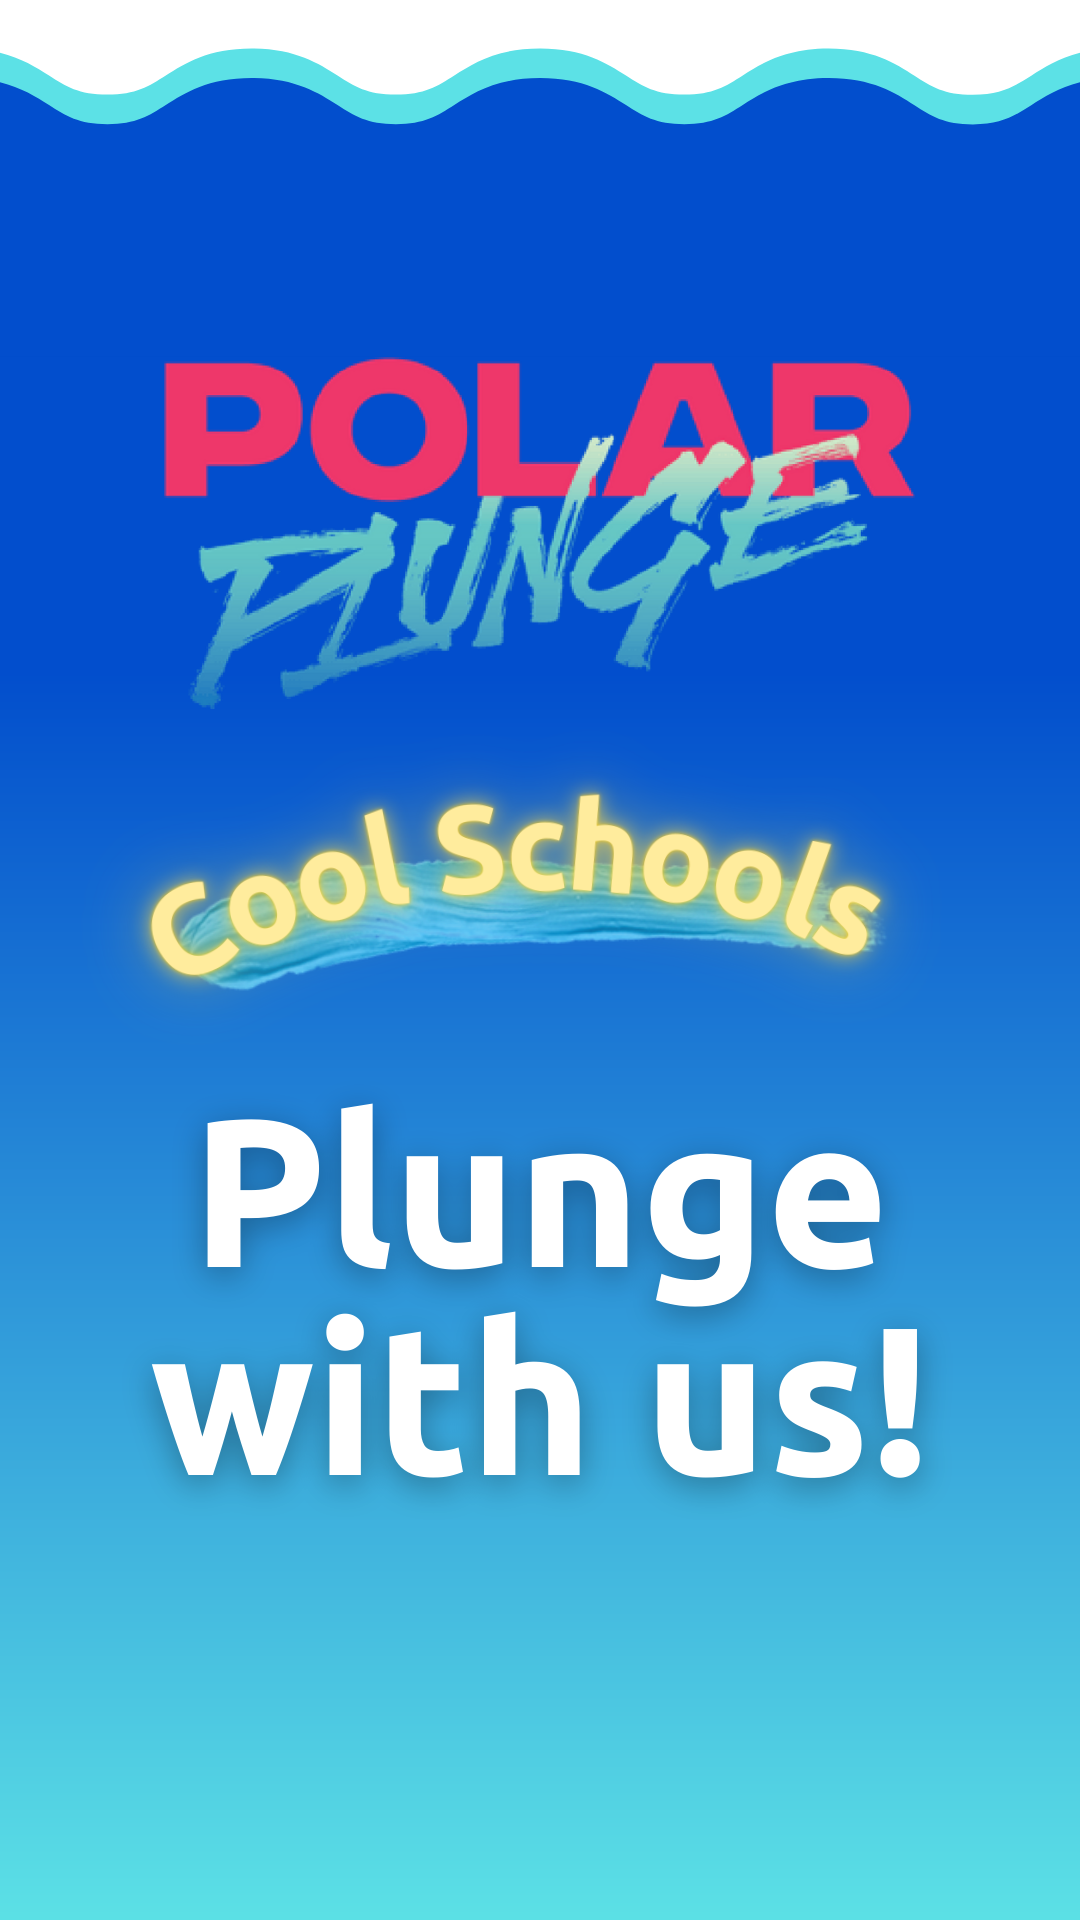 Polar Plunge Cool Schools Instagram Story 3